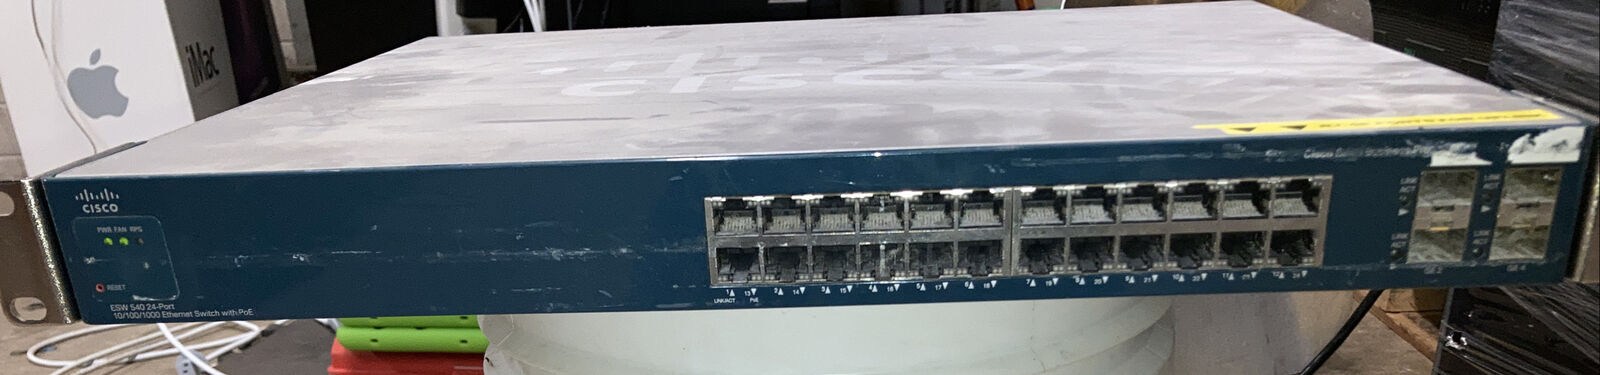 Cisco ESW-540-24-K9 Small Business Pro 24-port 10/100/1000 Ethernet Switch 